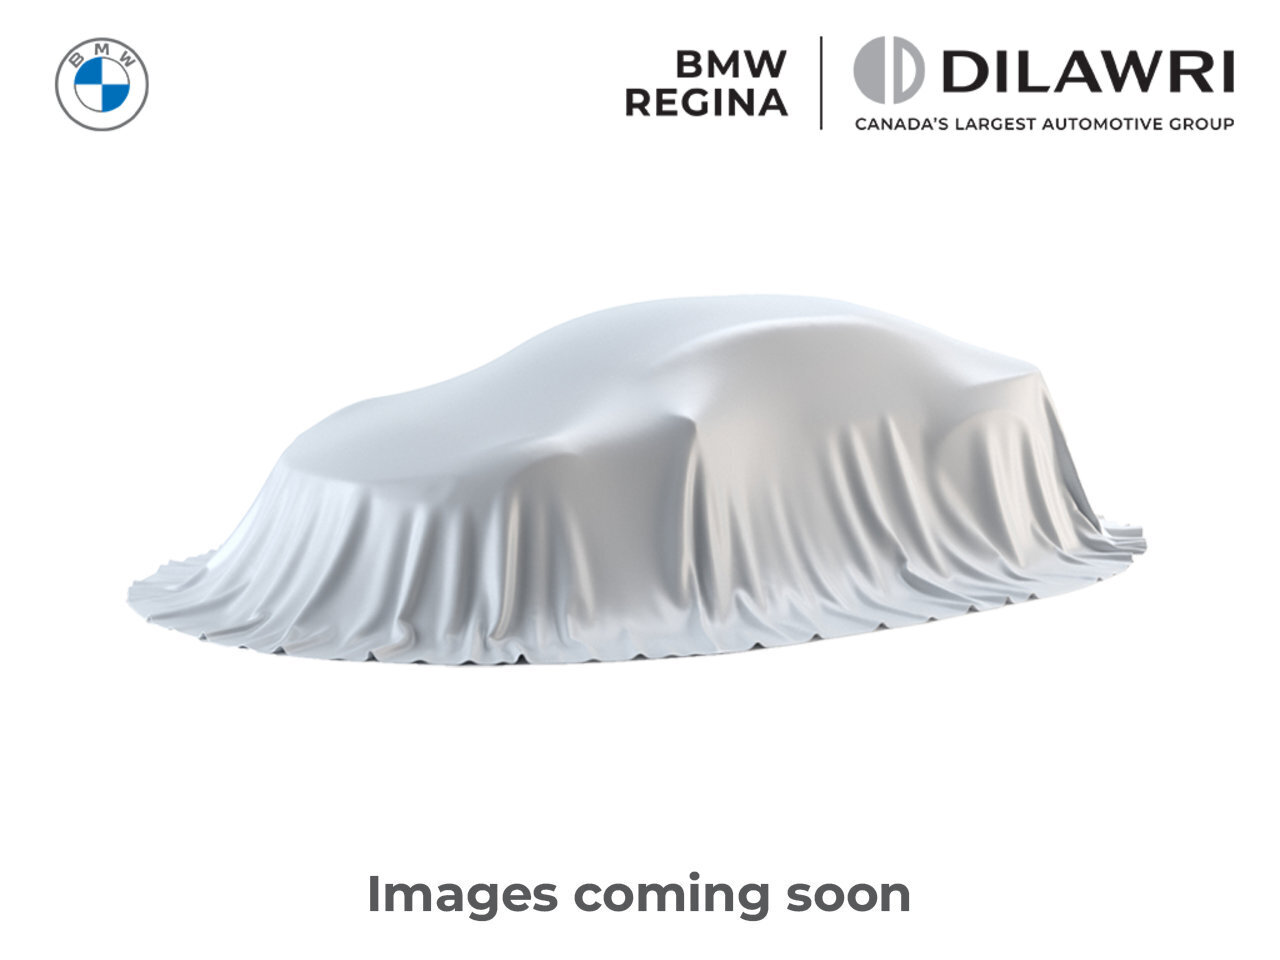 2021 BMW X7 XDrive40i 7 Passenger, Nav, Remote Start, Low Km, 